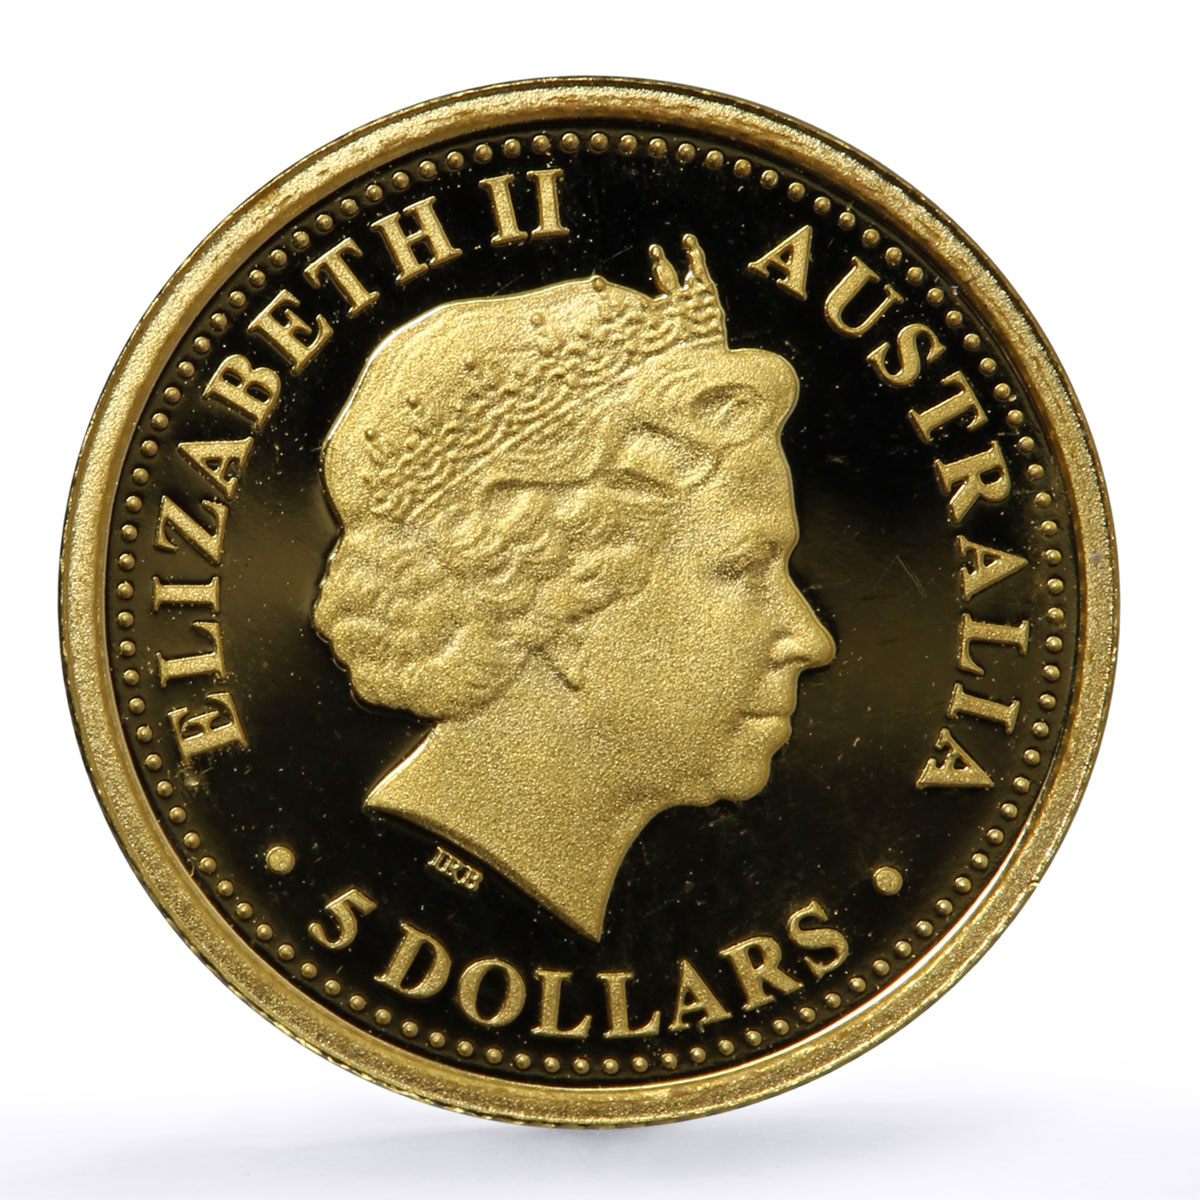 Australia 5 dollars Discovers Neck Lizard Animals Fauna proof gold coin 2008